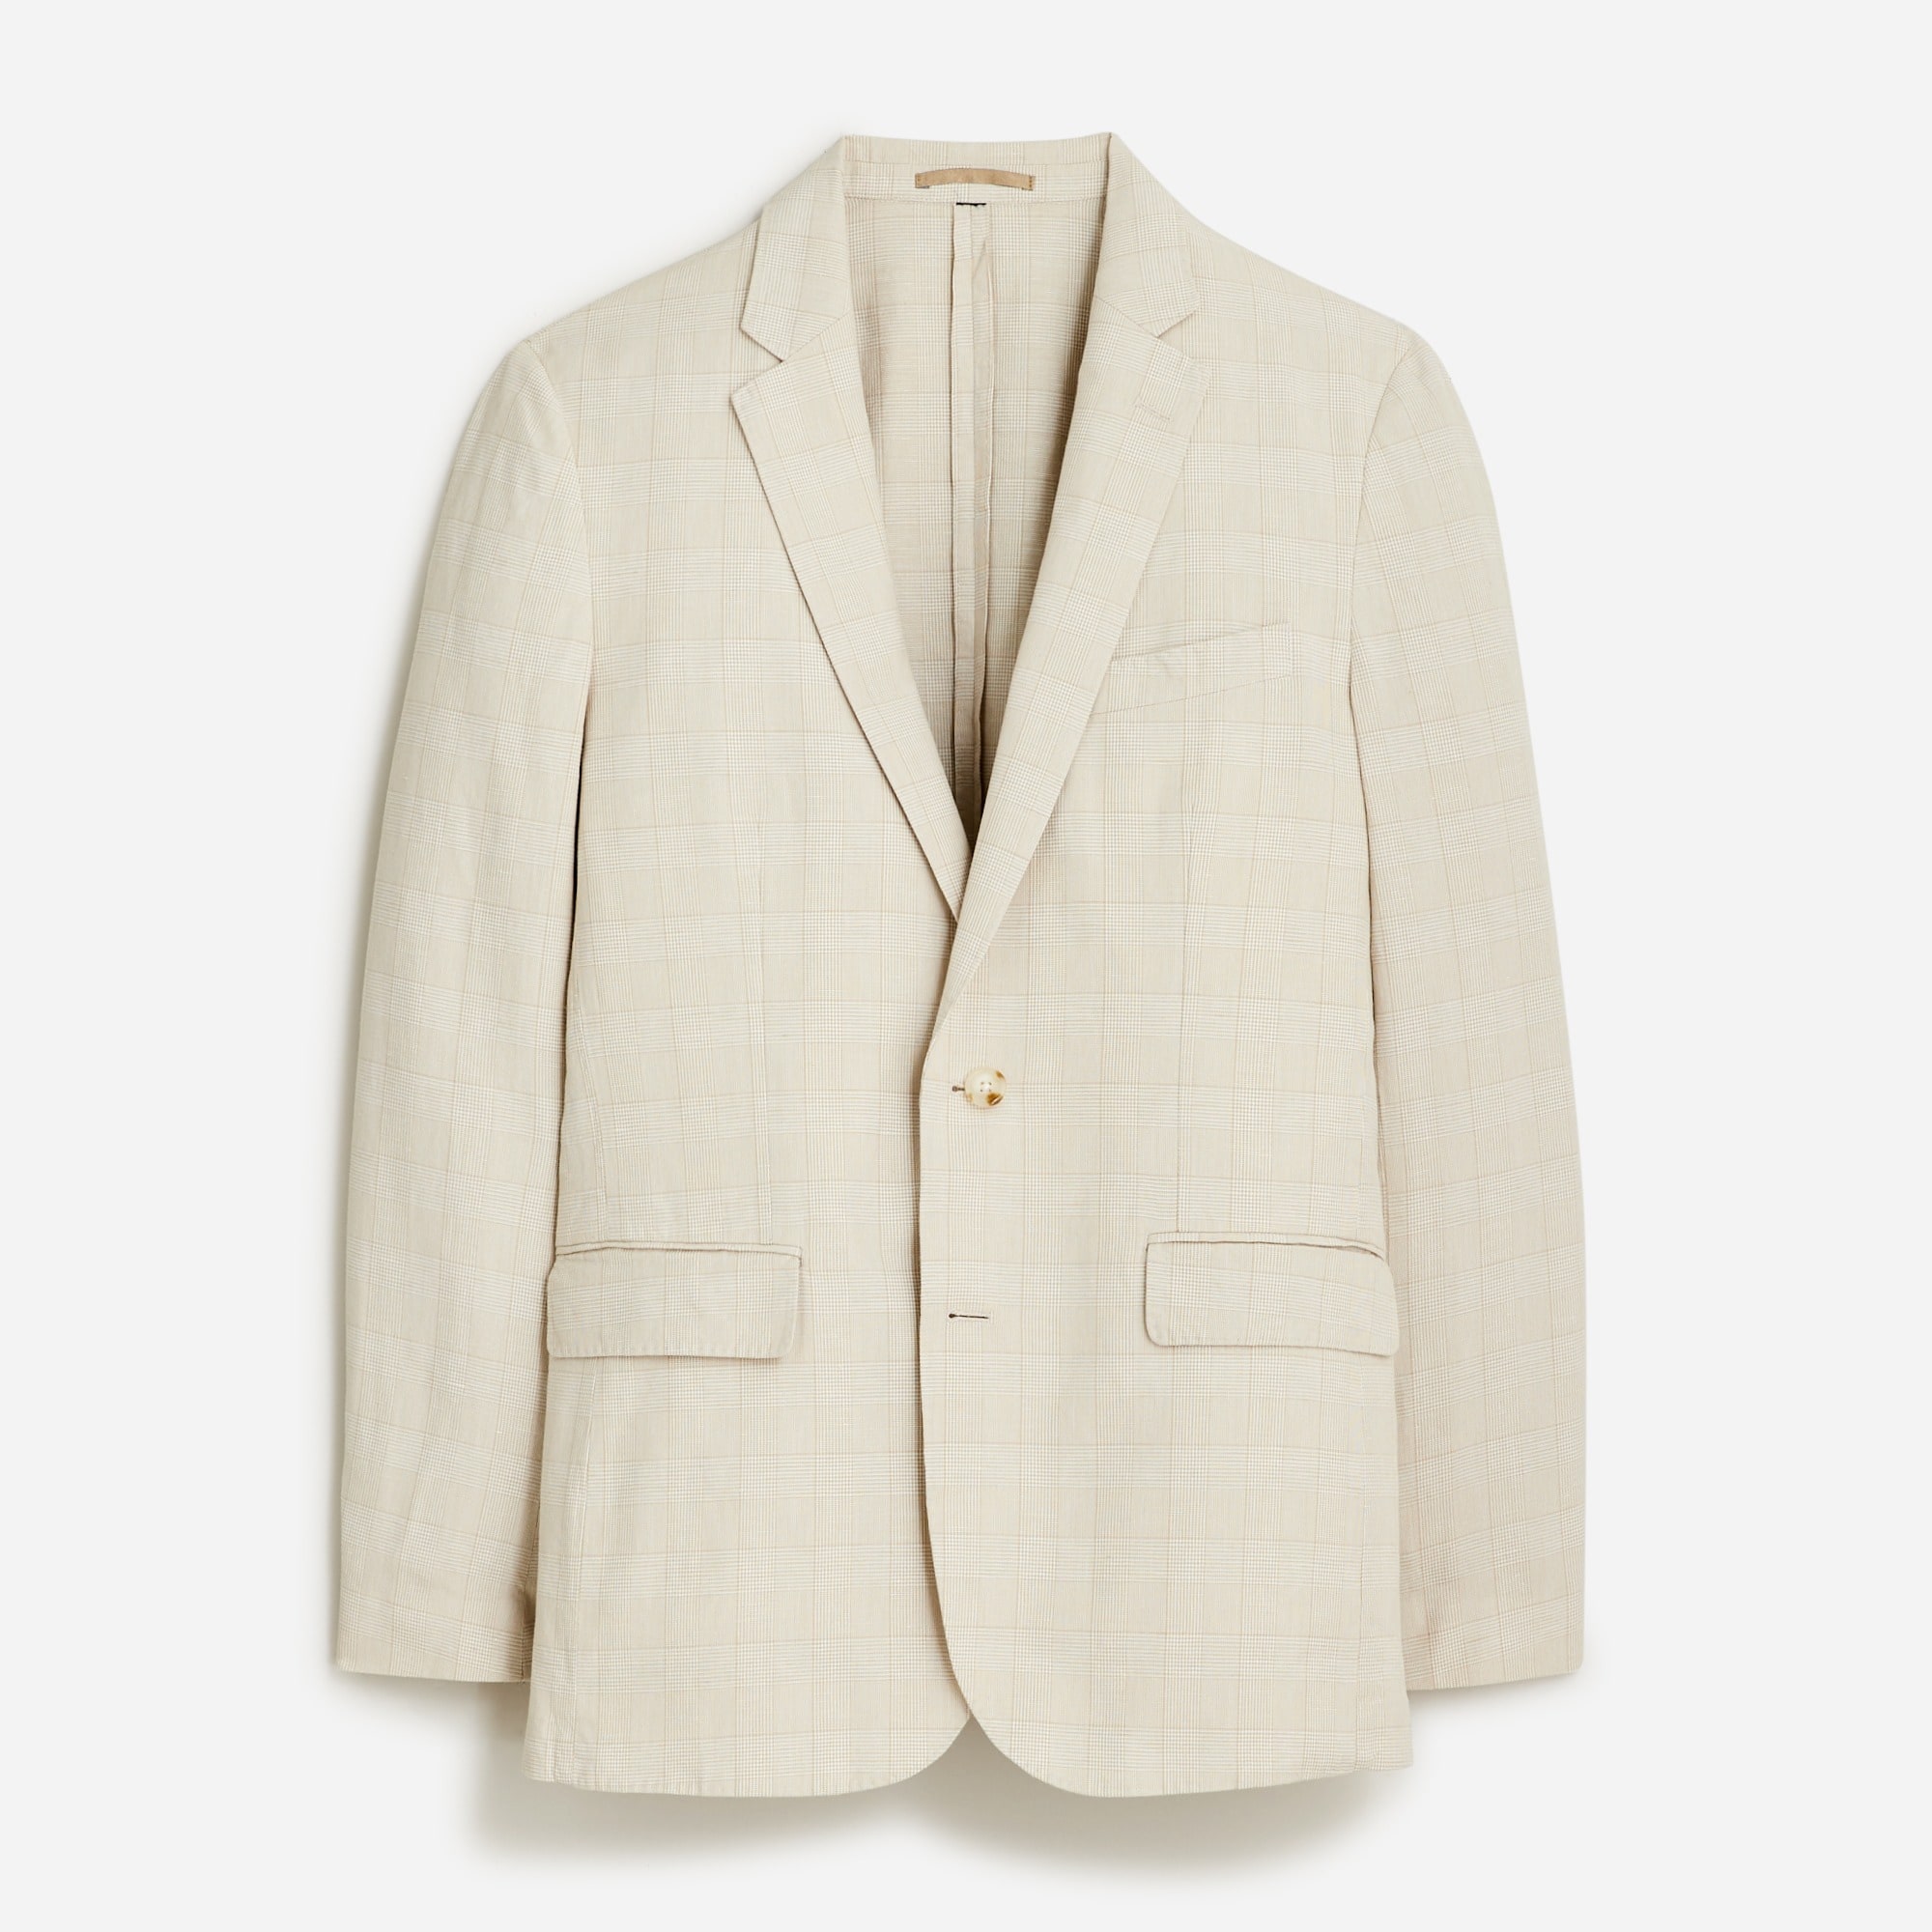  Ludlow Slim-fit unstructured suit jacket in Irish cotton-linen blend